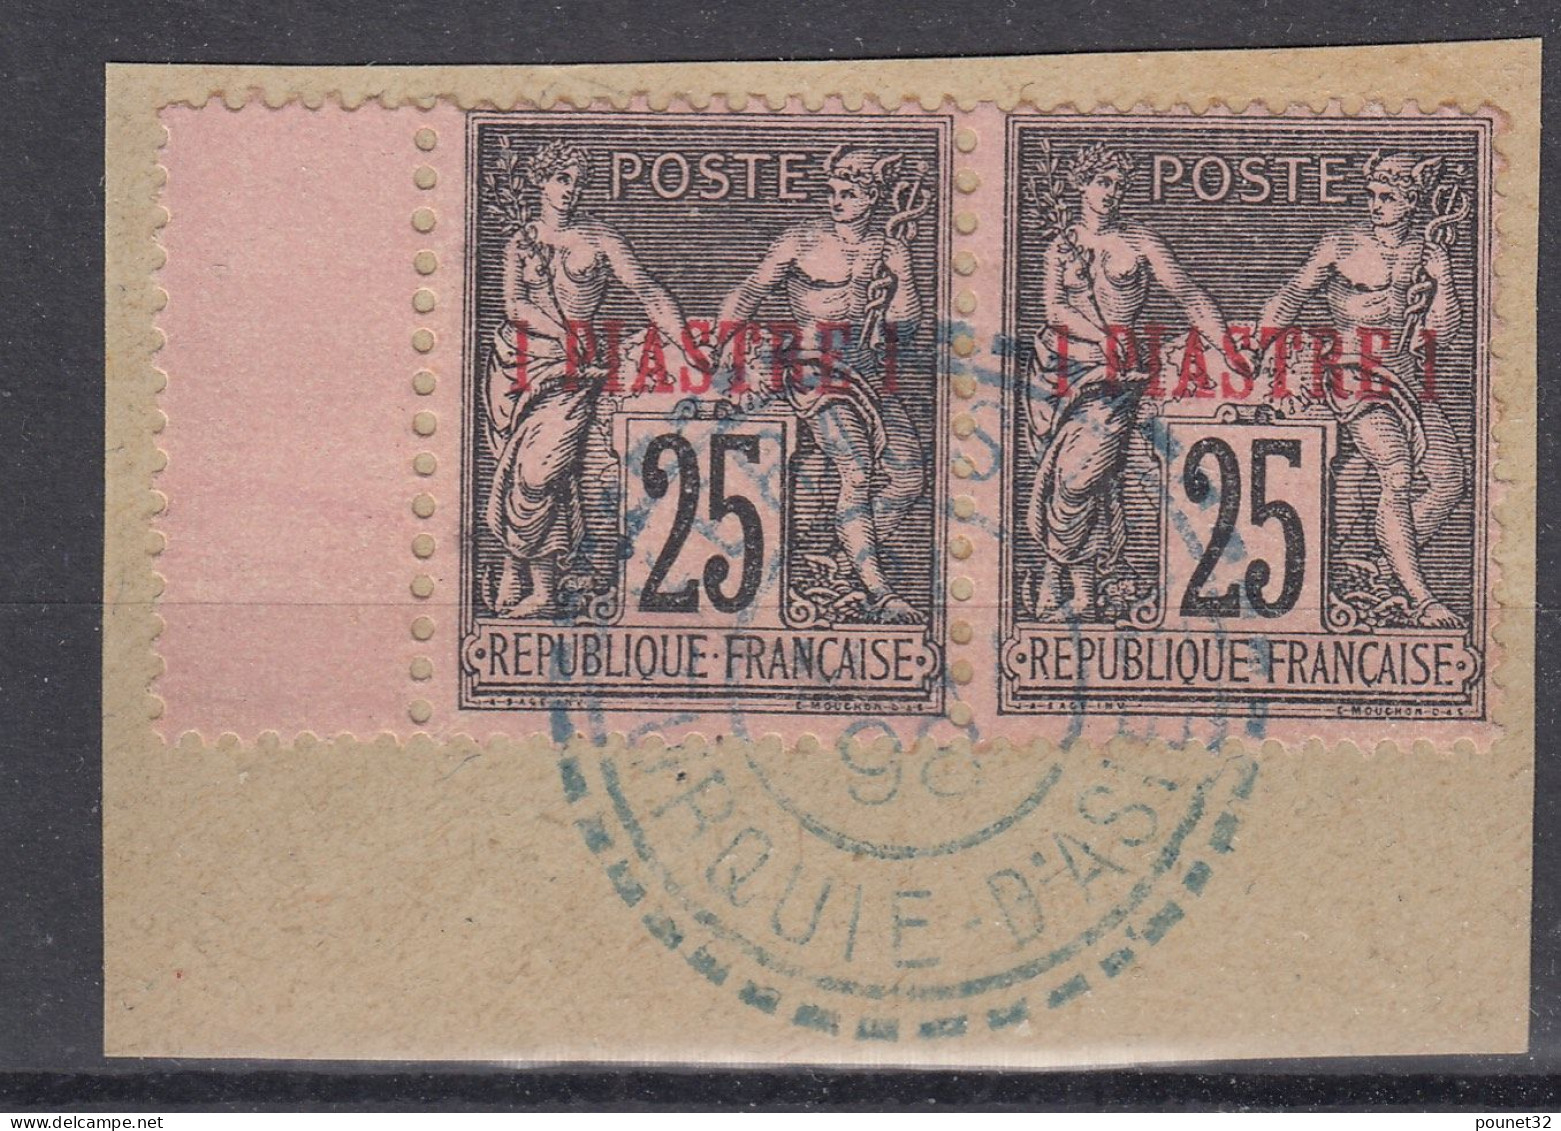 TIMBRE LEVANT SAGE PAIRE N° 4 RARE CACHET PERLE BLEU KERASSUNDE TURQUIE D'ASIE SUR FRAGMENT - Used Stamps